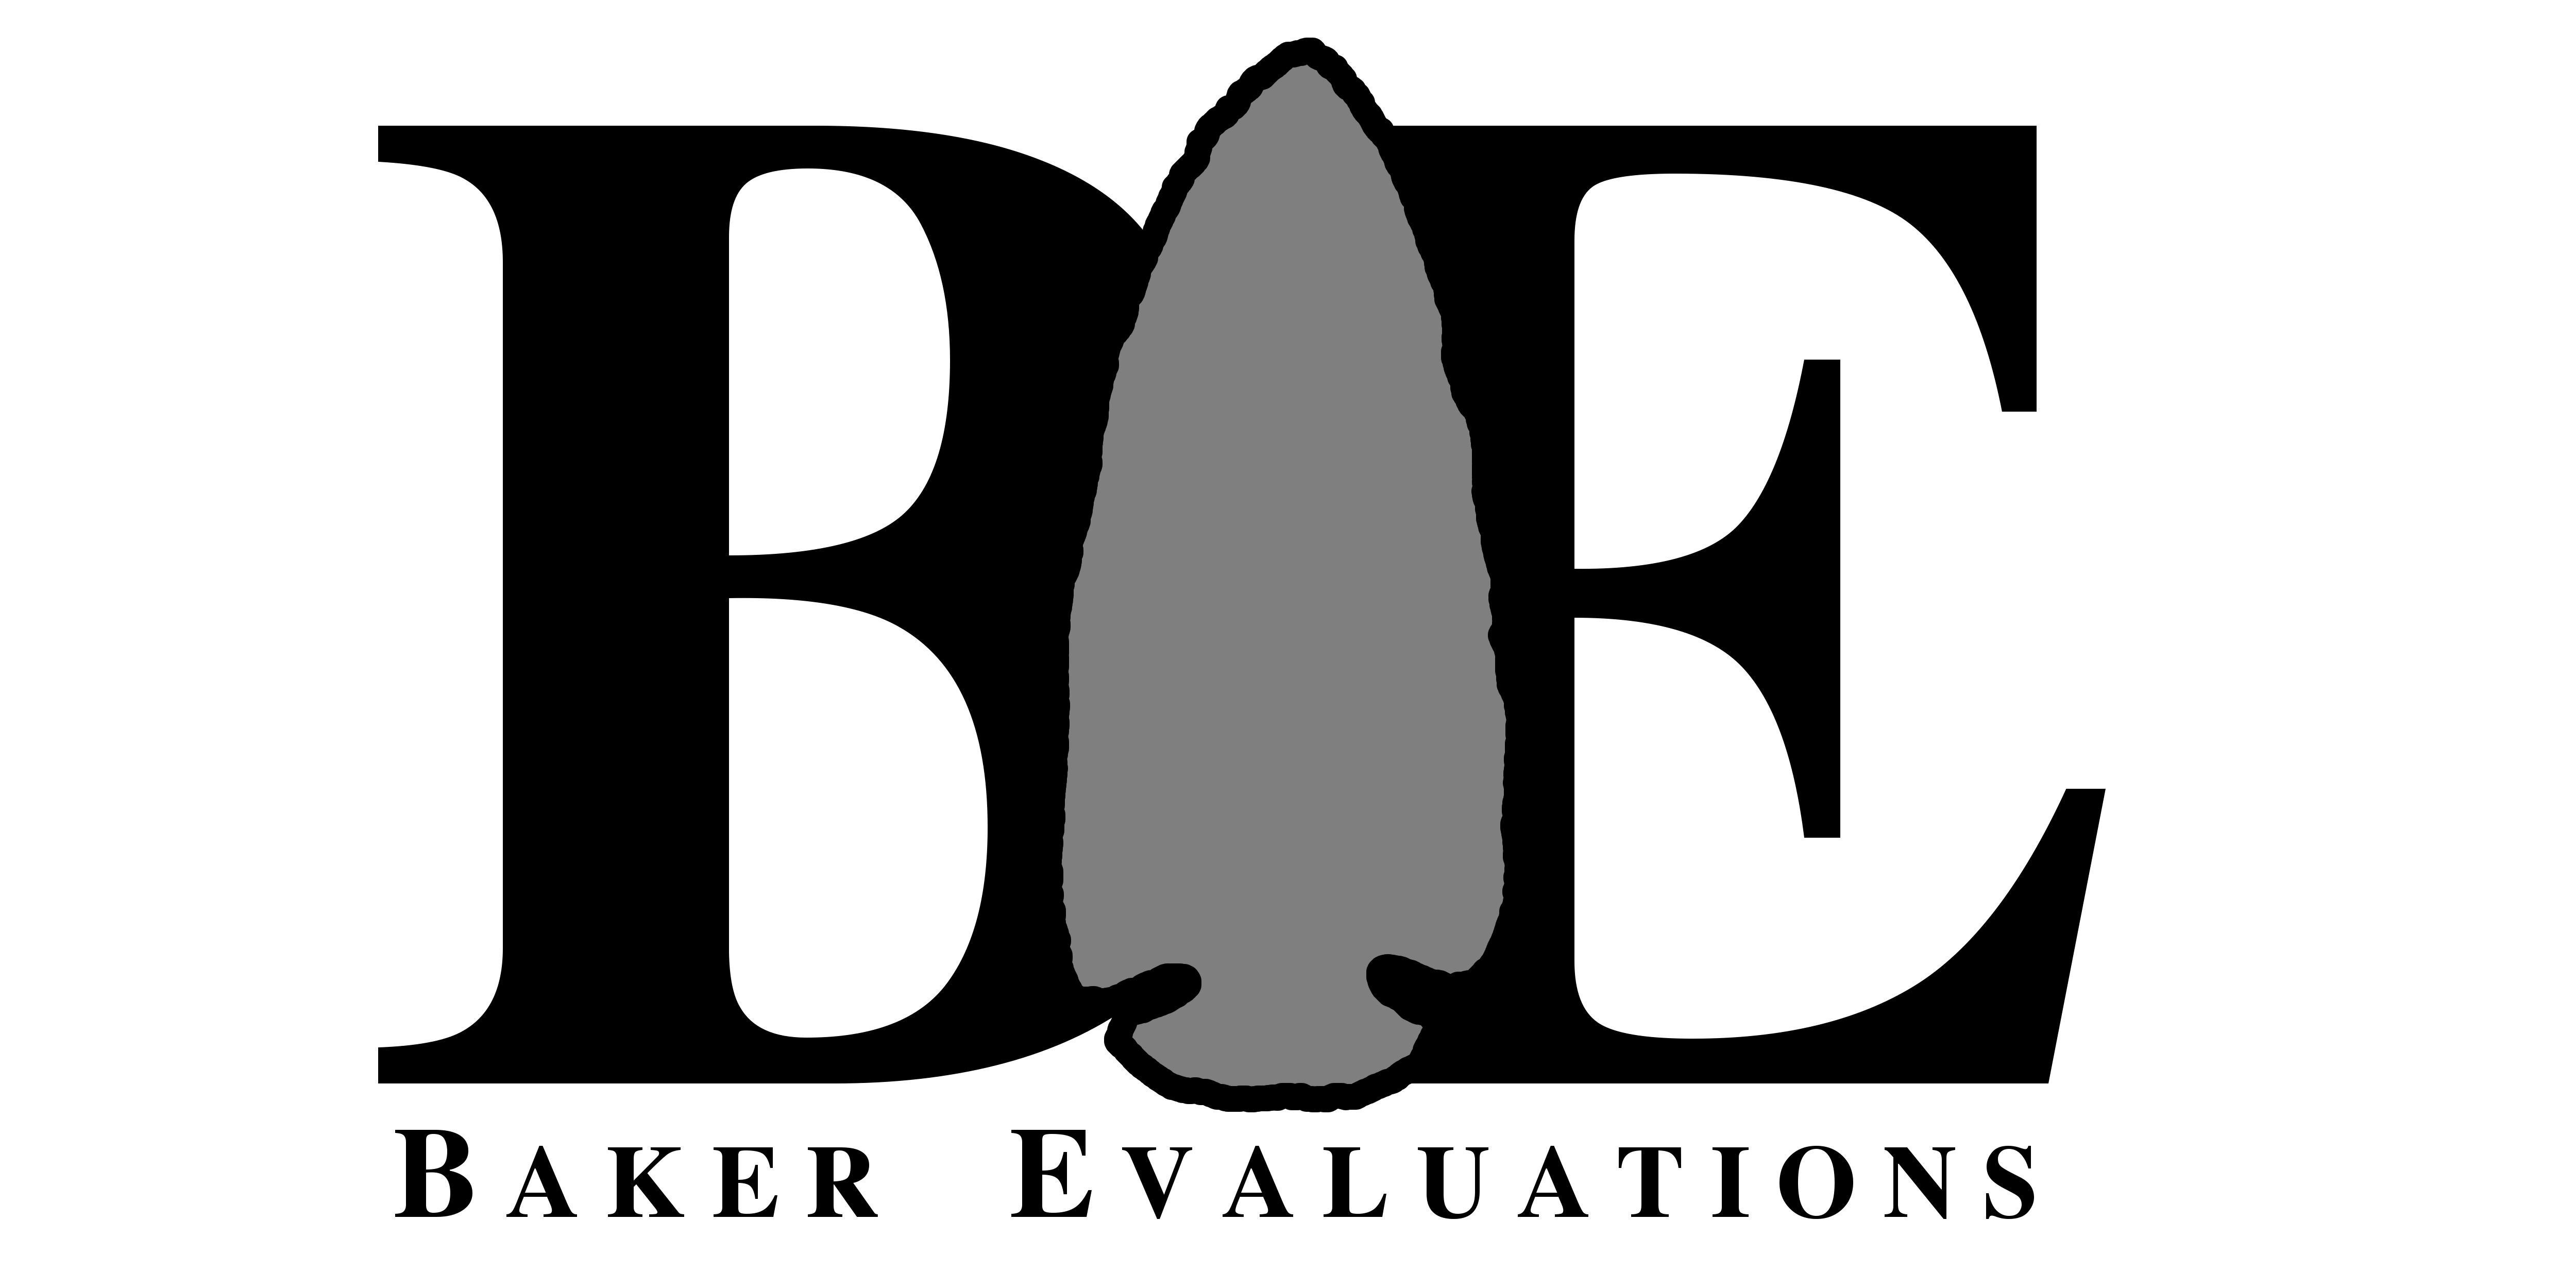 Black and White Evaluation Logo - Services - Baker Evaluation